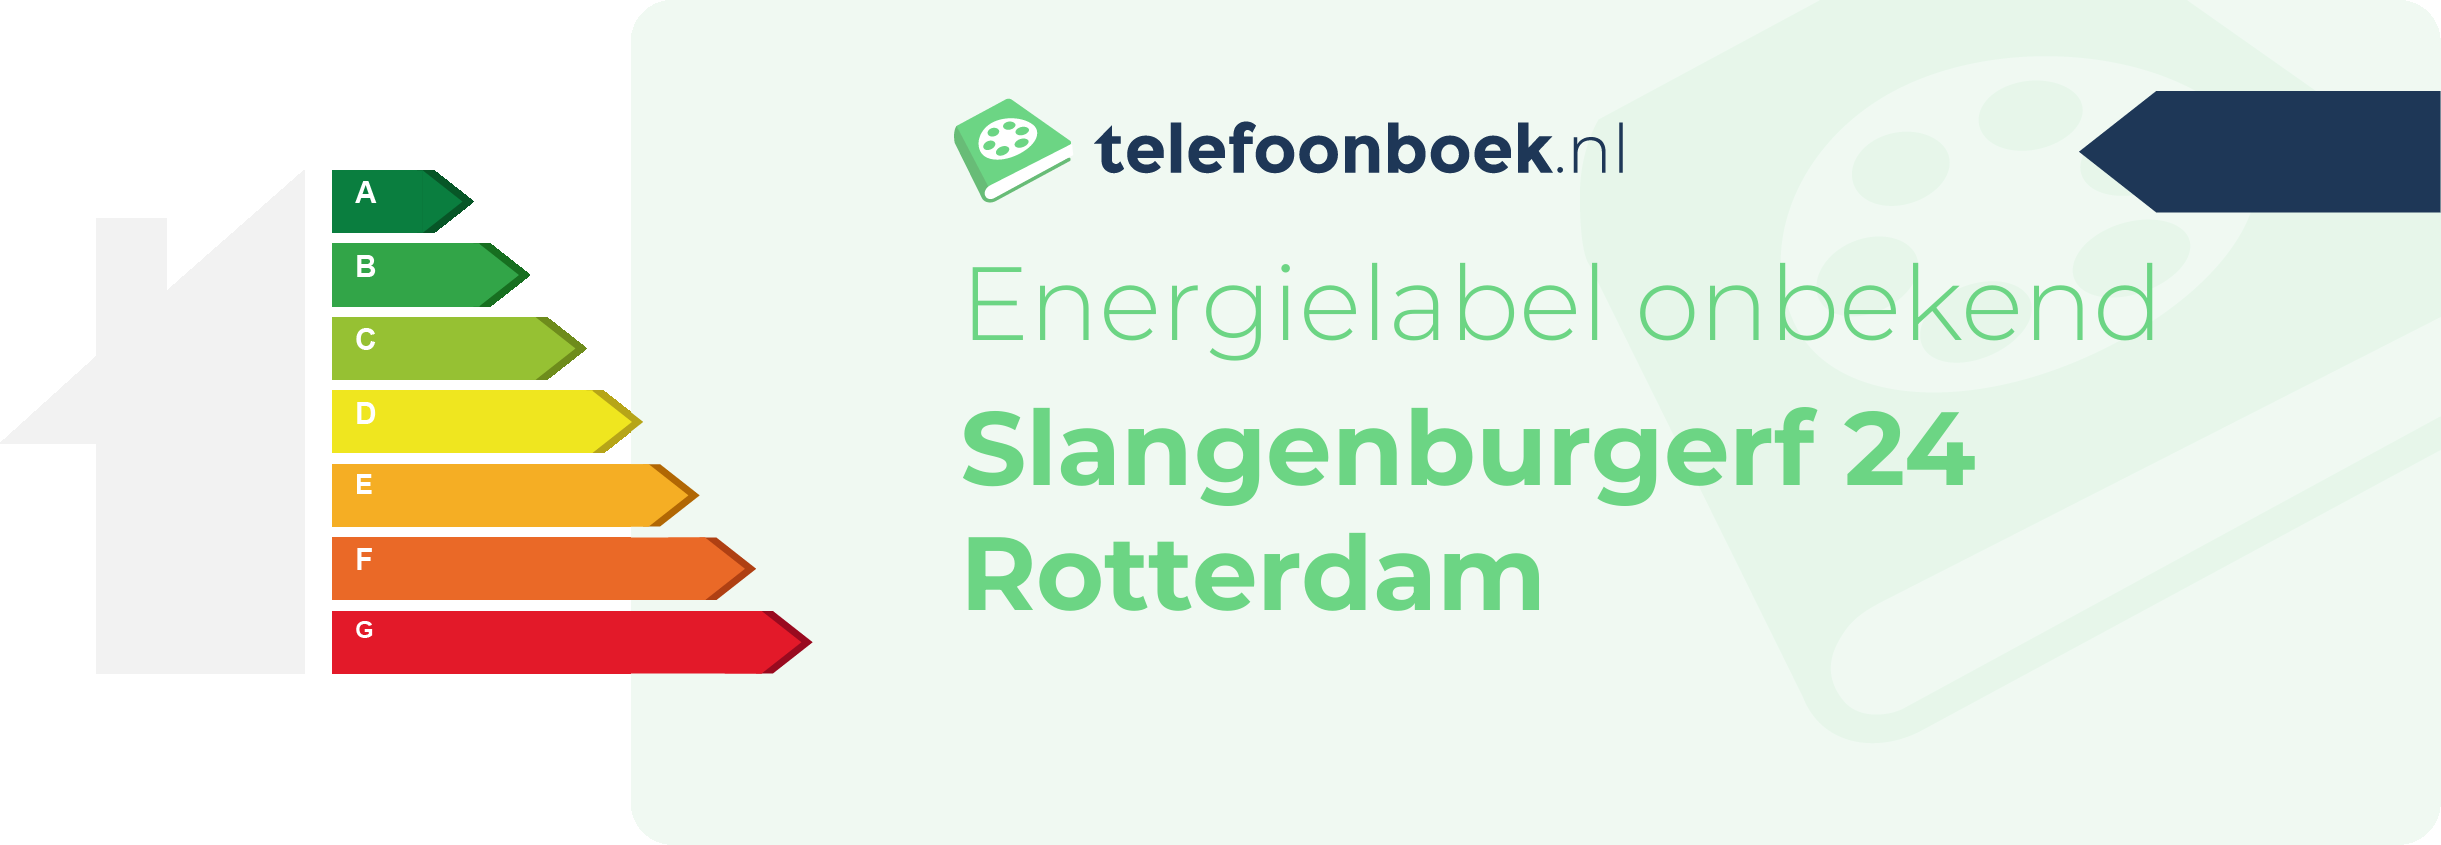 Energielabel Slangenburgerf 24 Rotterdam